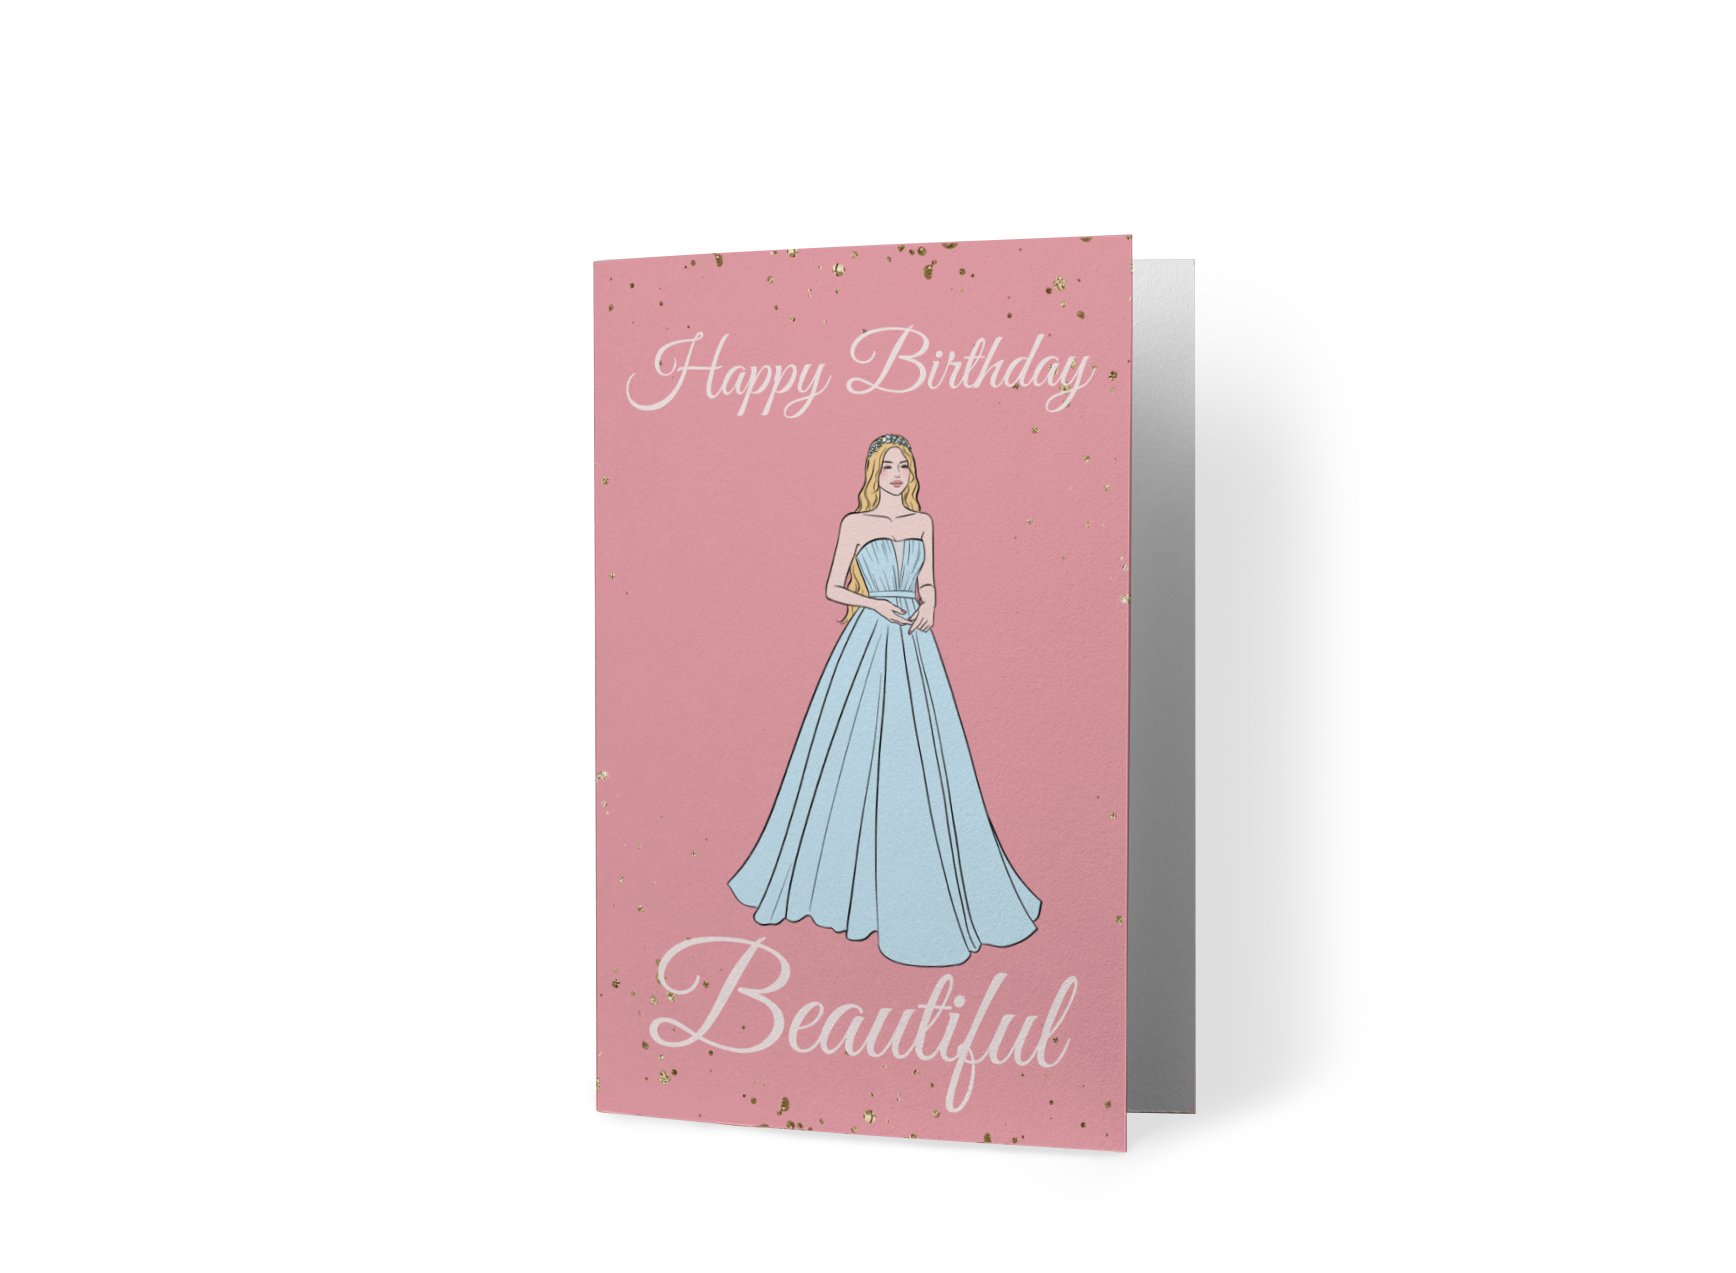 Happy Birthday - TSWM Gift Card mockup.jpg